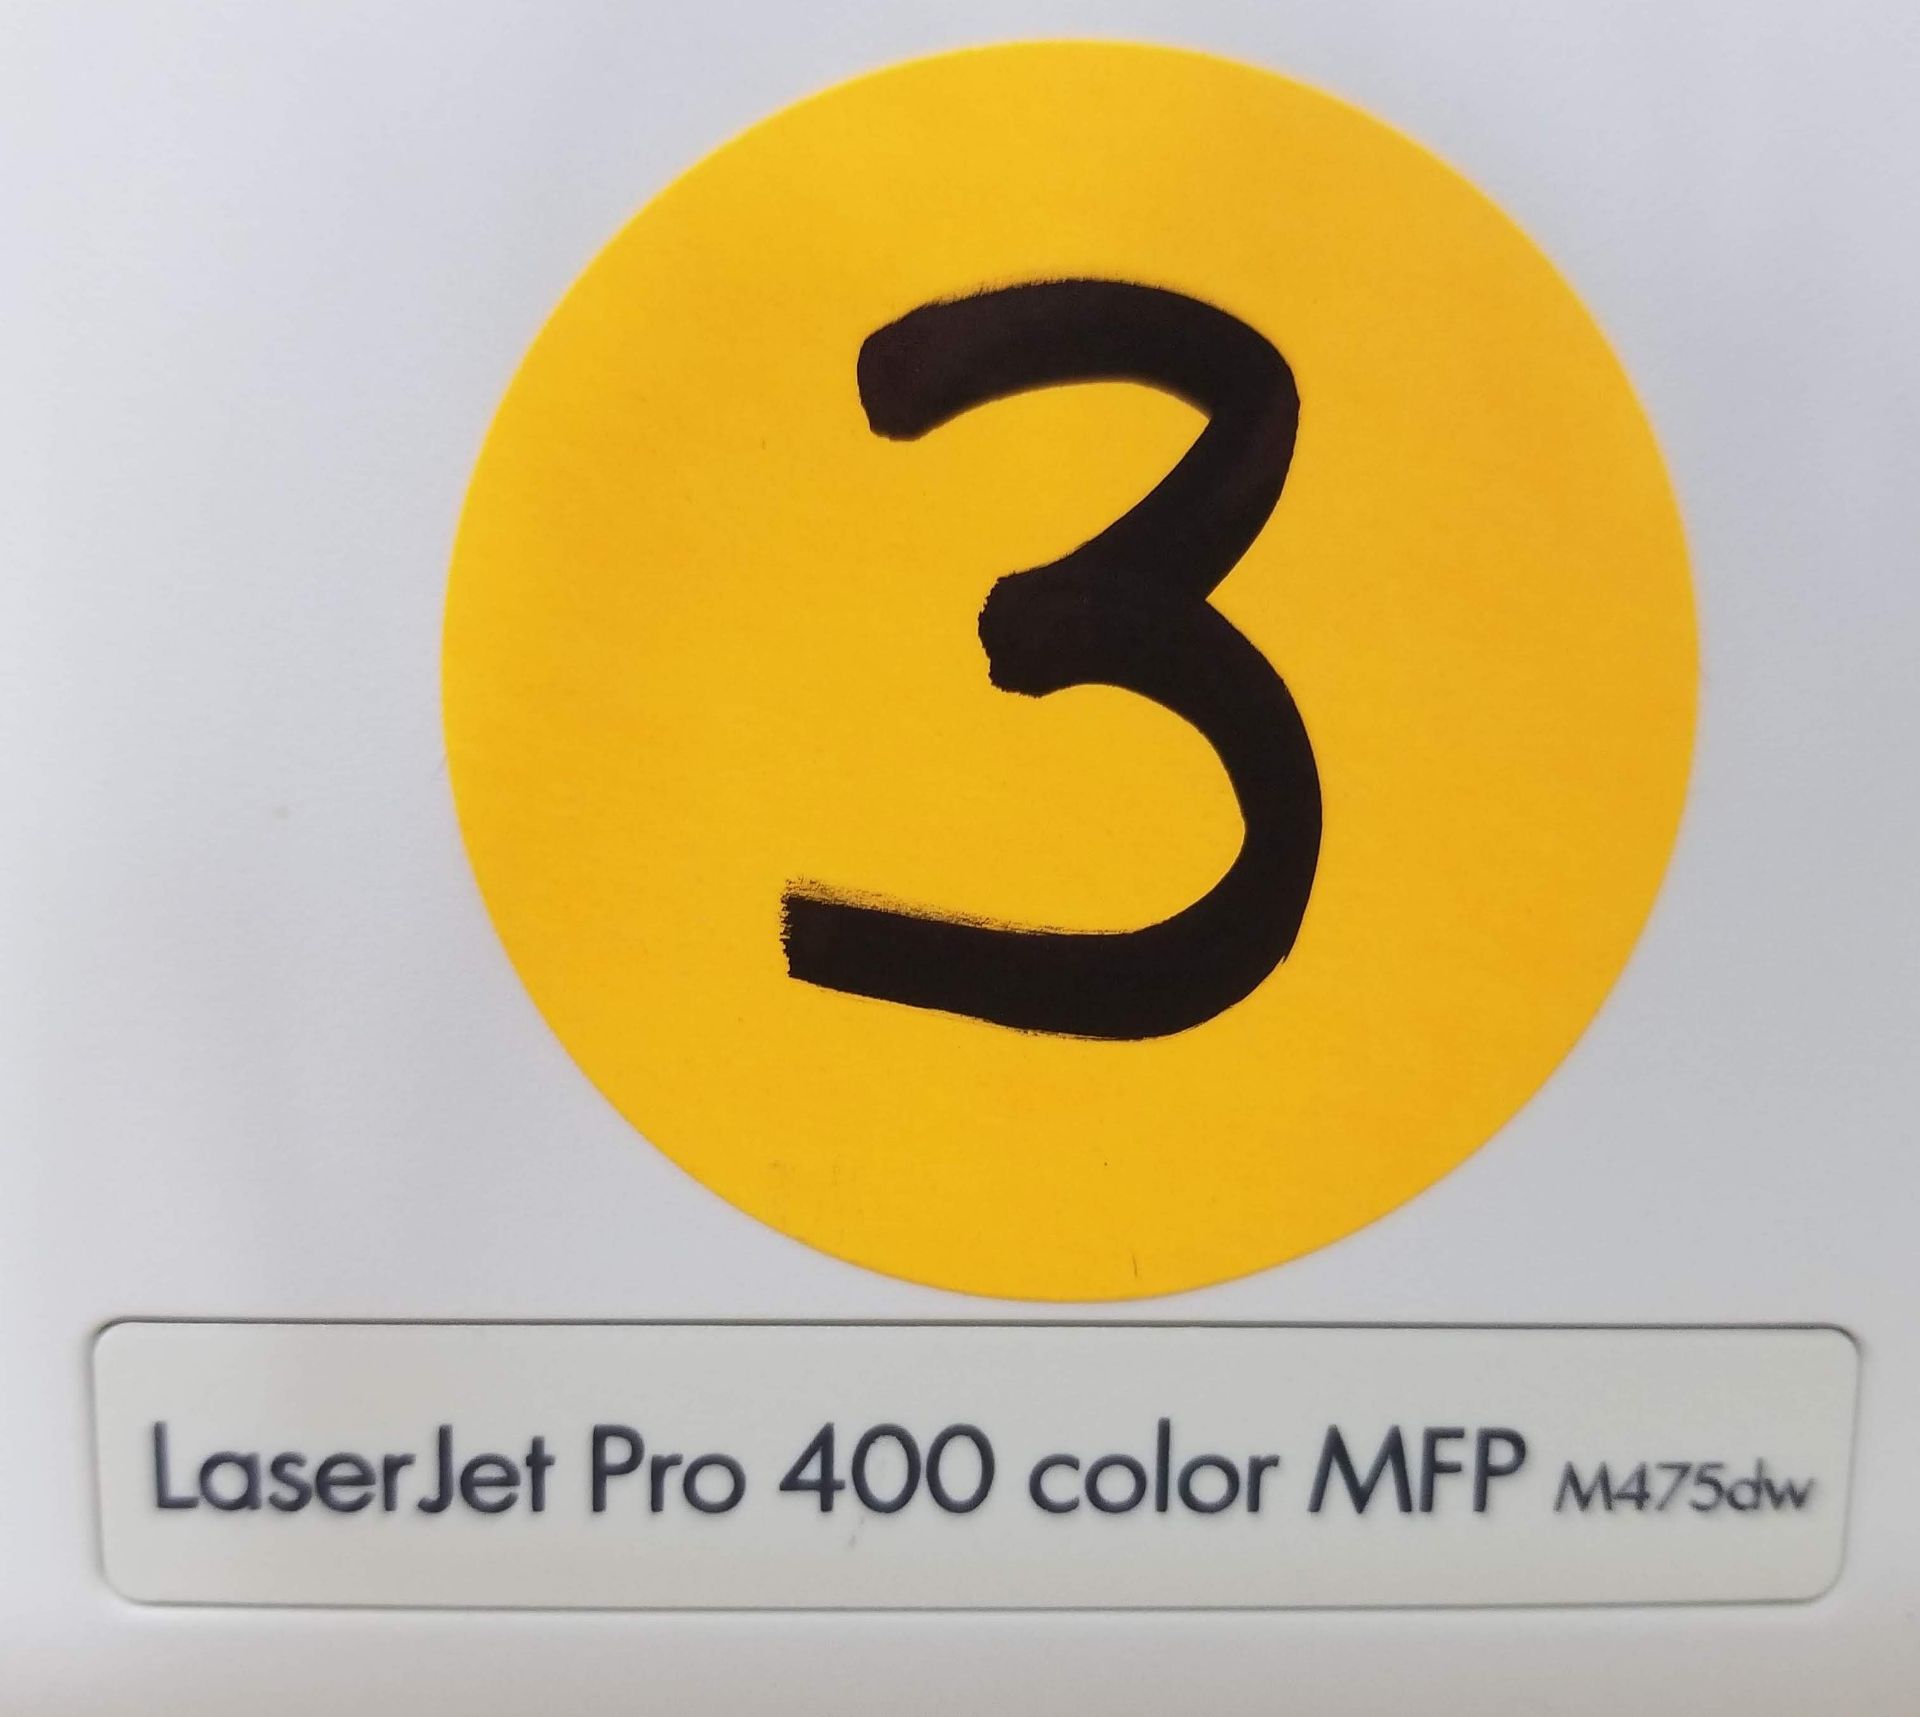 HP - LASERJET PRO 400 COLOR MFP - M475dw - Image 4 of 5